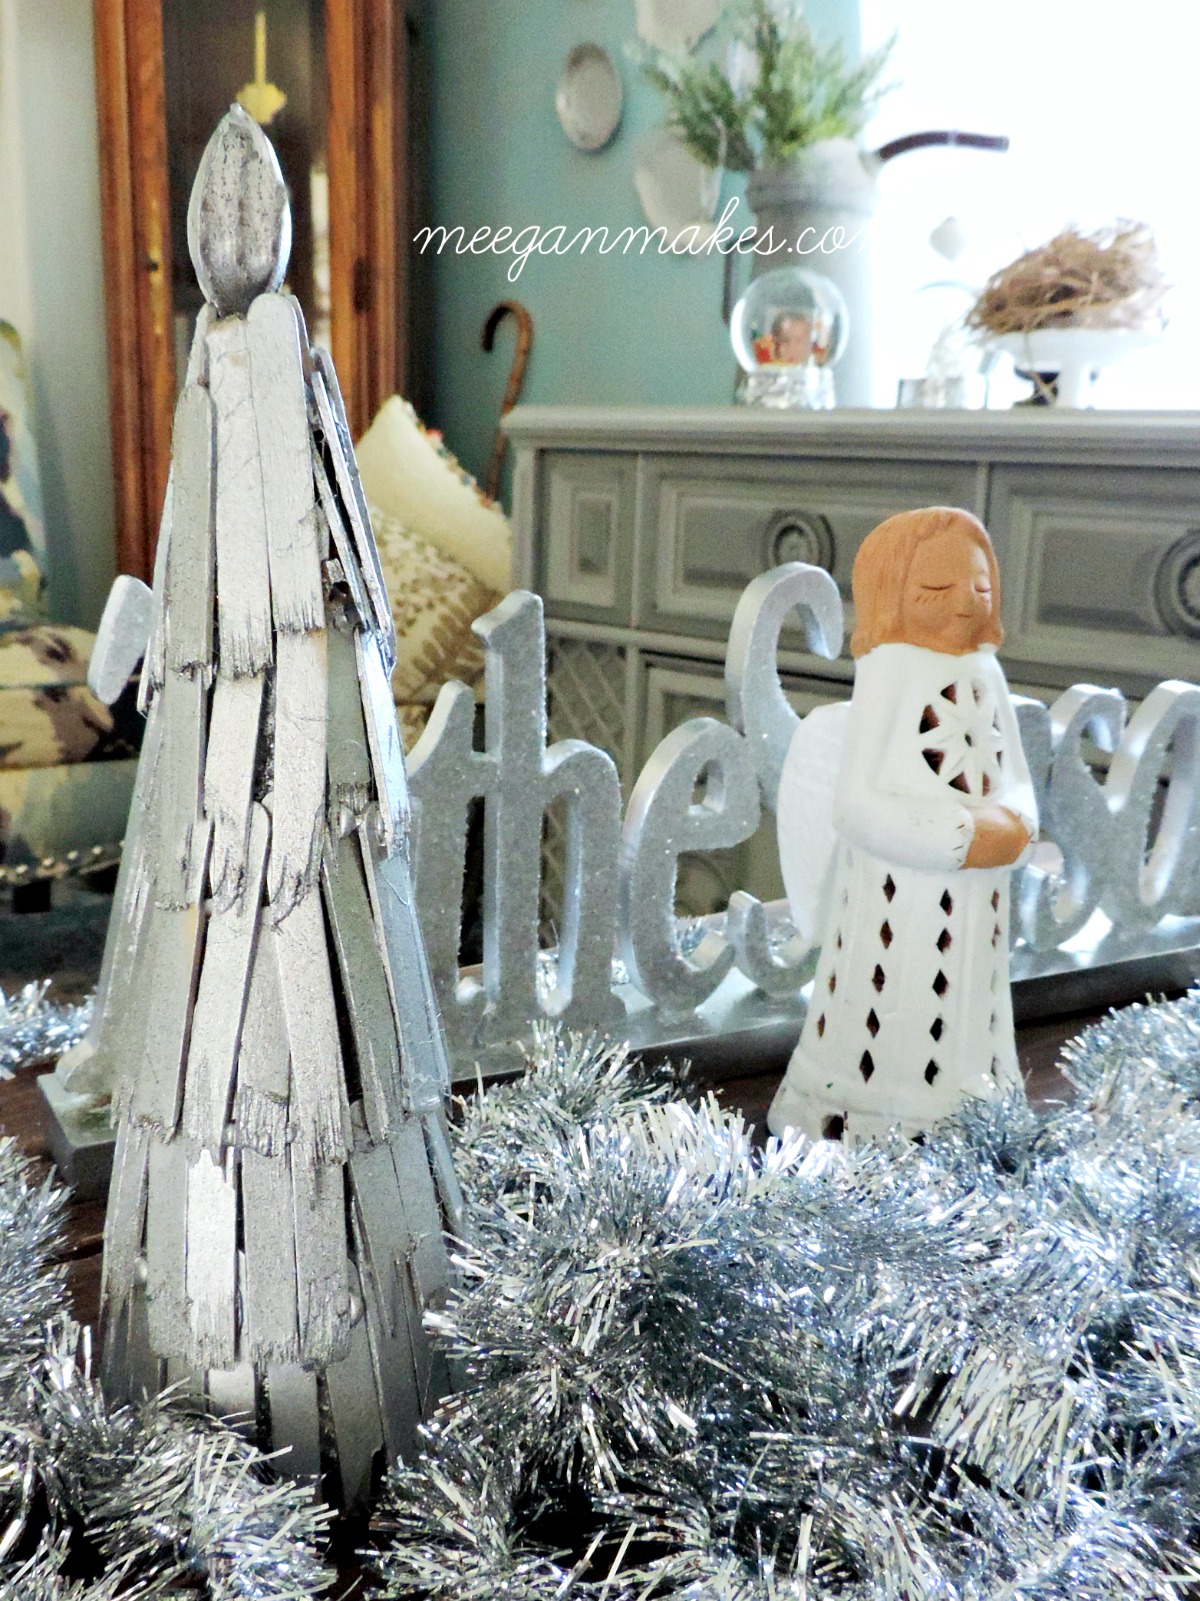 Decorative Table Christmas Trees